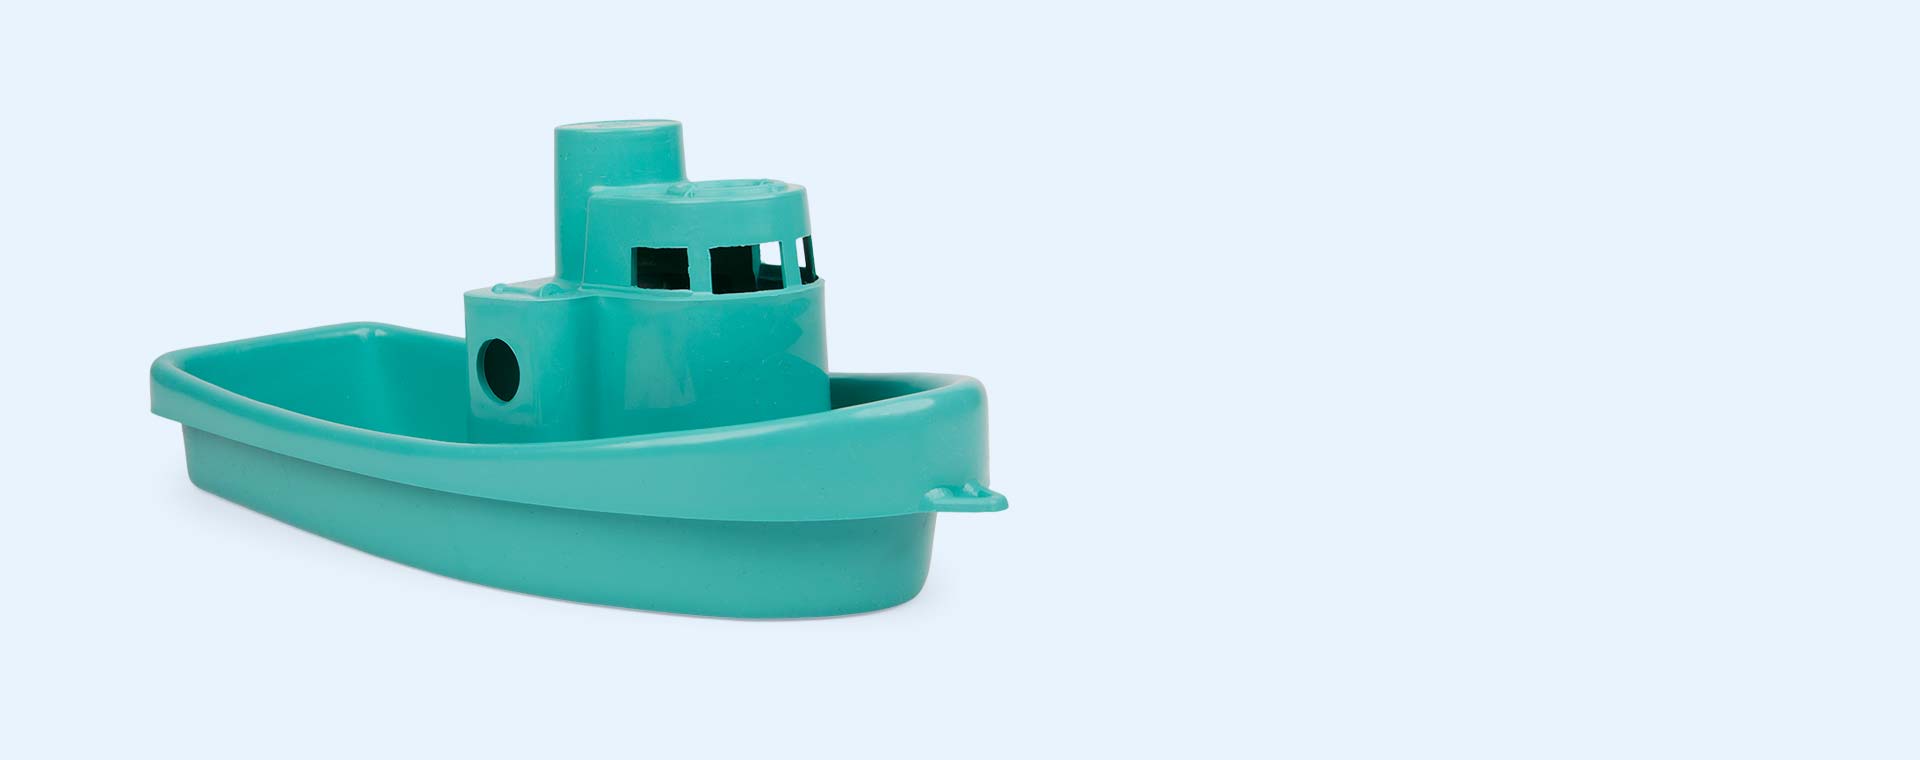 Multi Dantoy Blue Marine Toys Boat & Sand Set